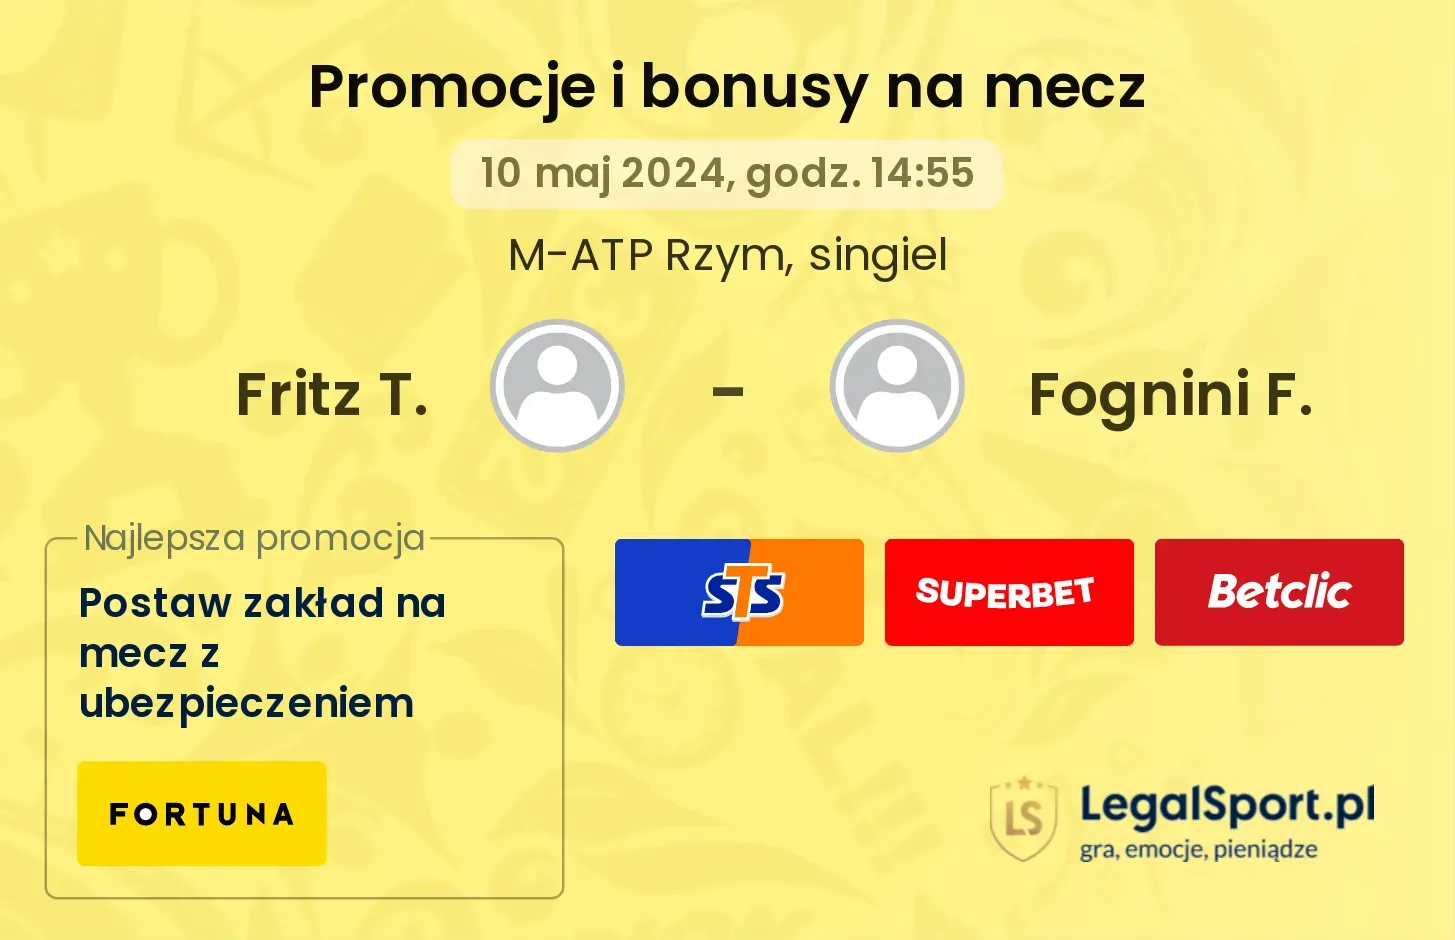 Fritz T. - Fognini F. promocje bonusy na mecz